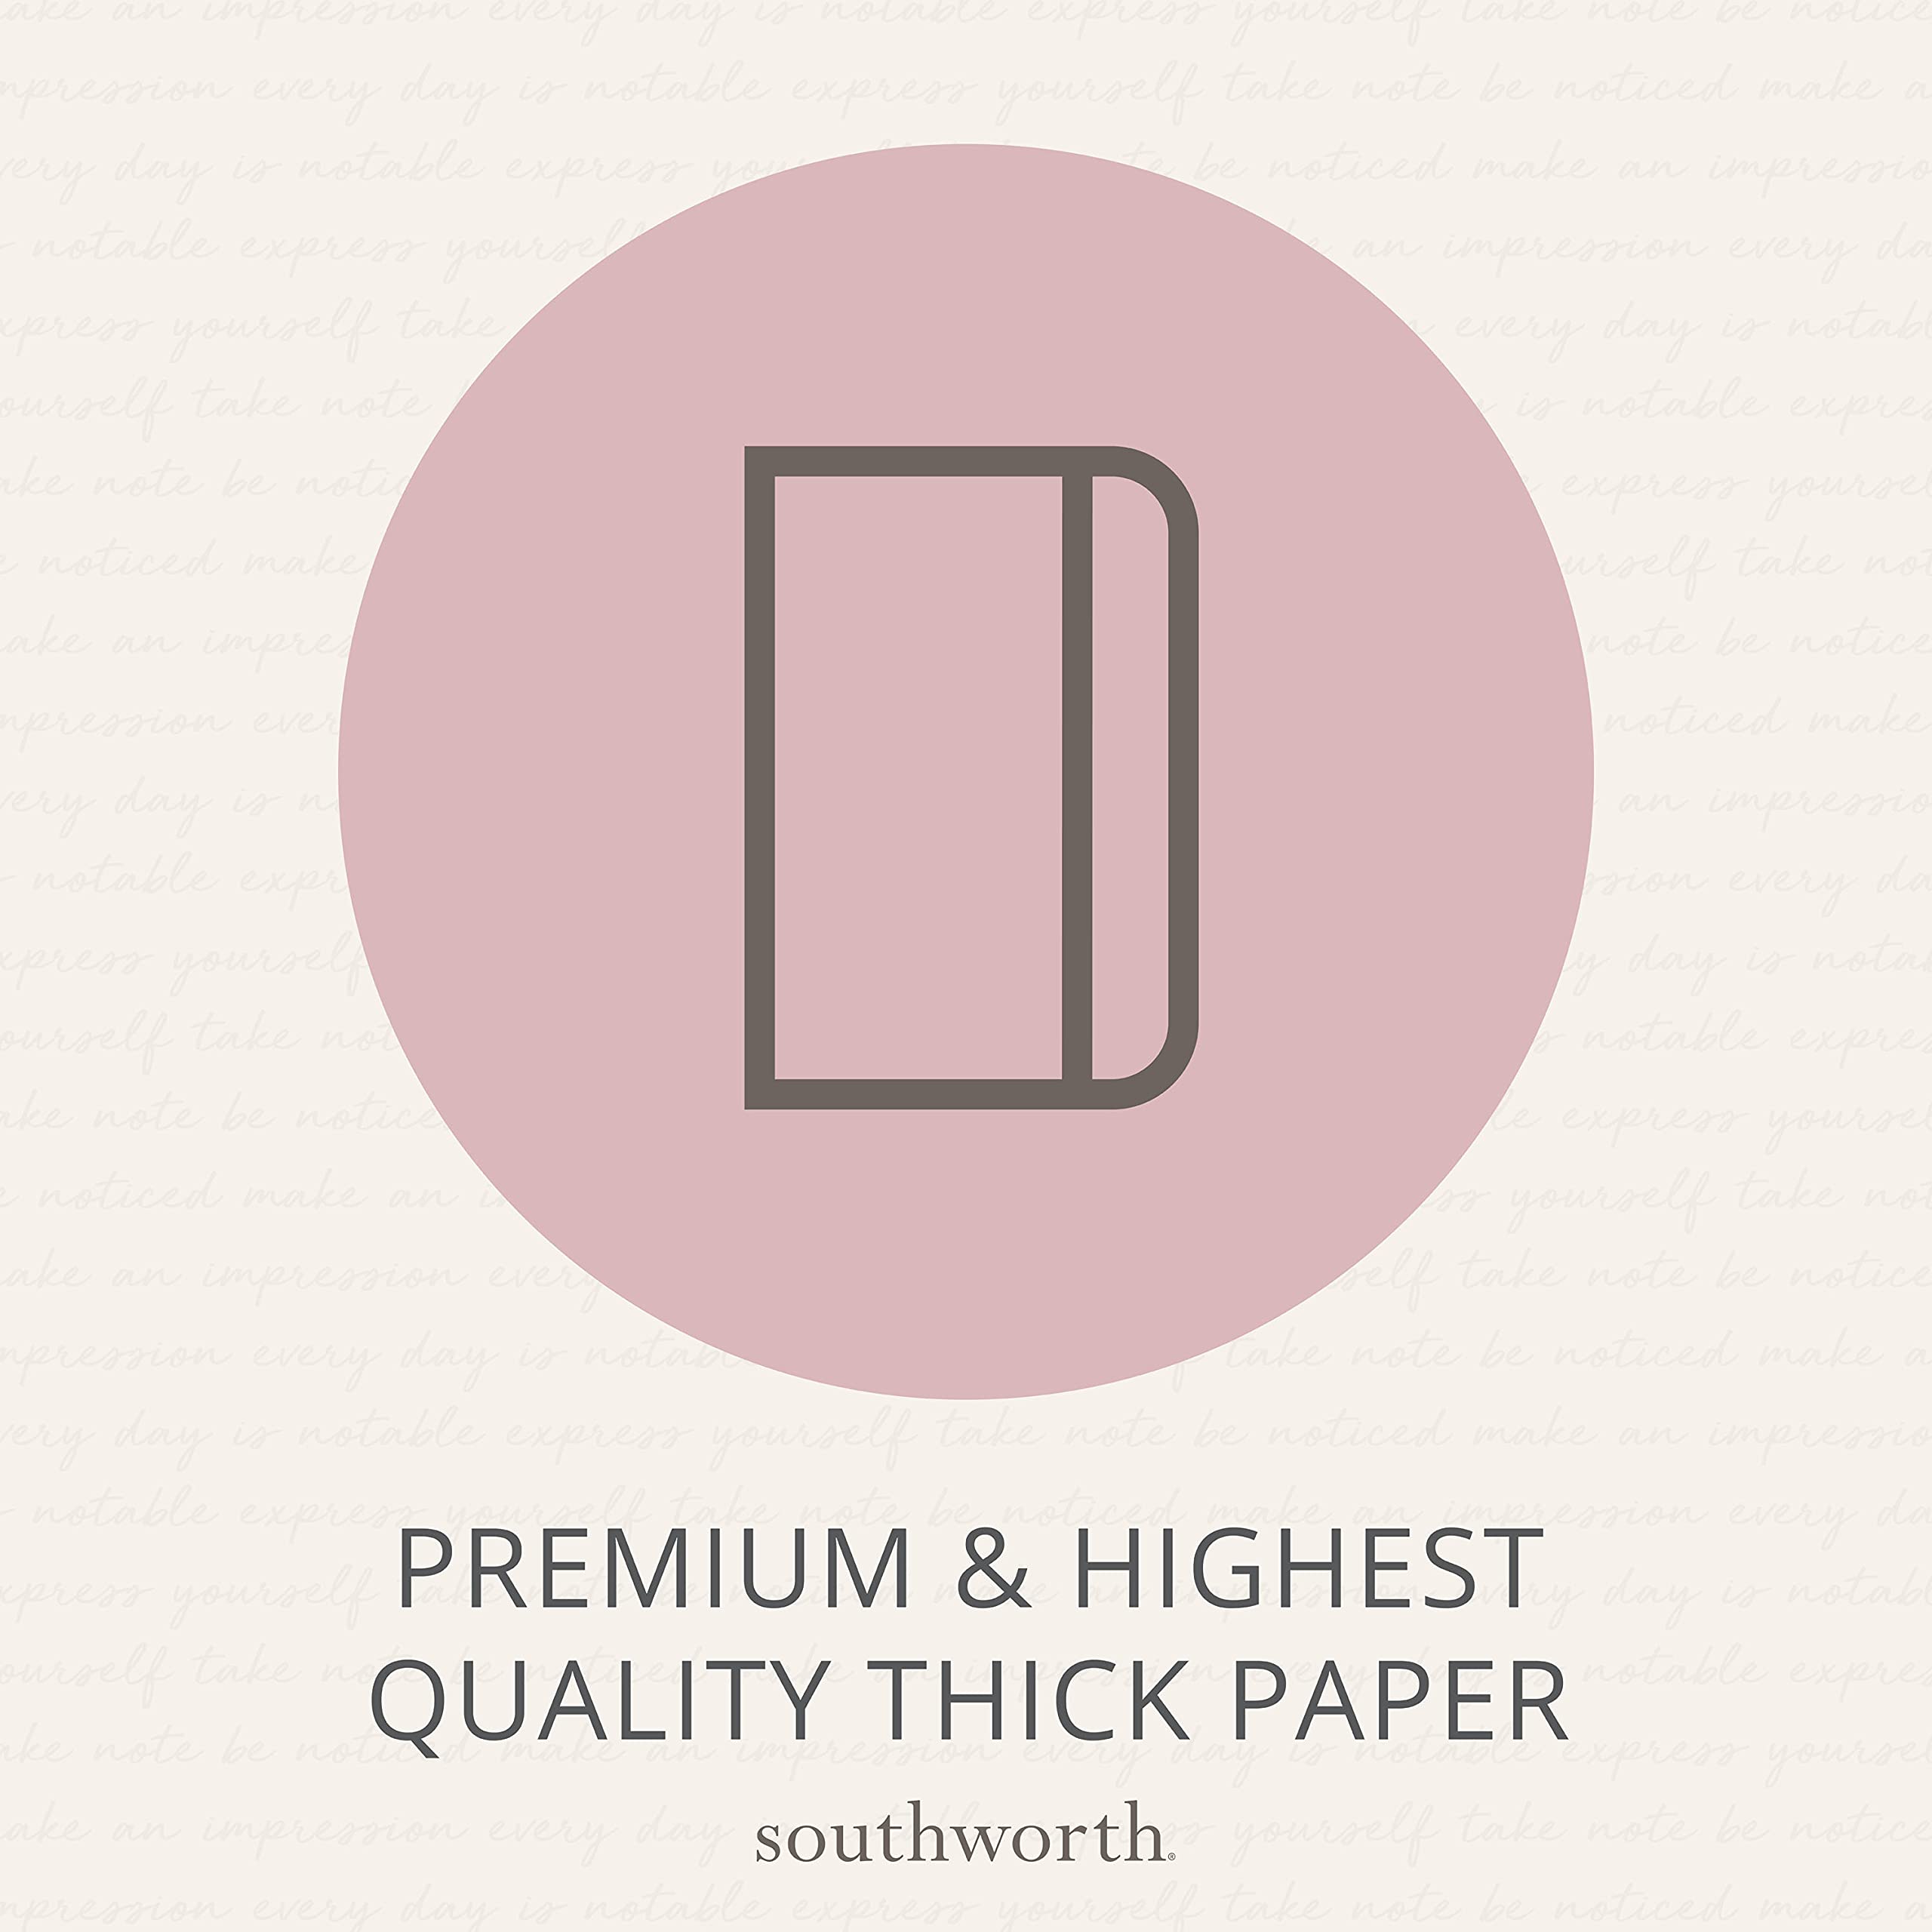 Southworth Premium Journal, 5.5”x 8.25”, Mint Burst Design, Premium 28lb/105gsm Paper, Medium Book Bound Journal, 3 Ribbon Placeholders, 80 Ruled Sheets/160 Ruled Pages (91926)